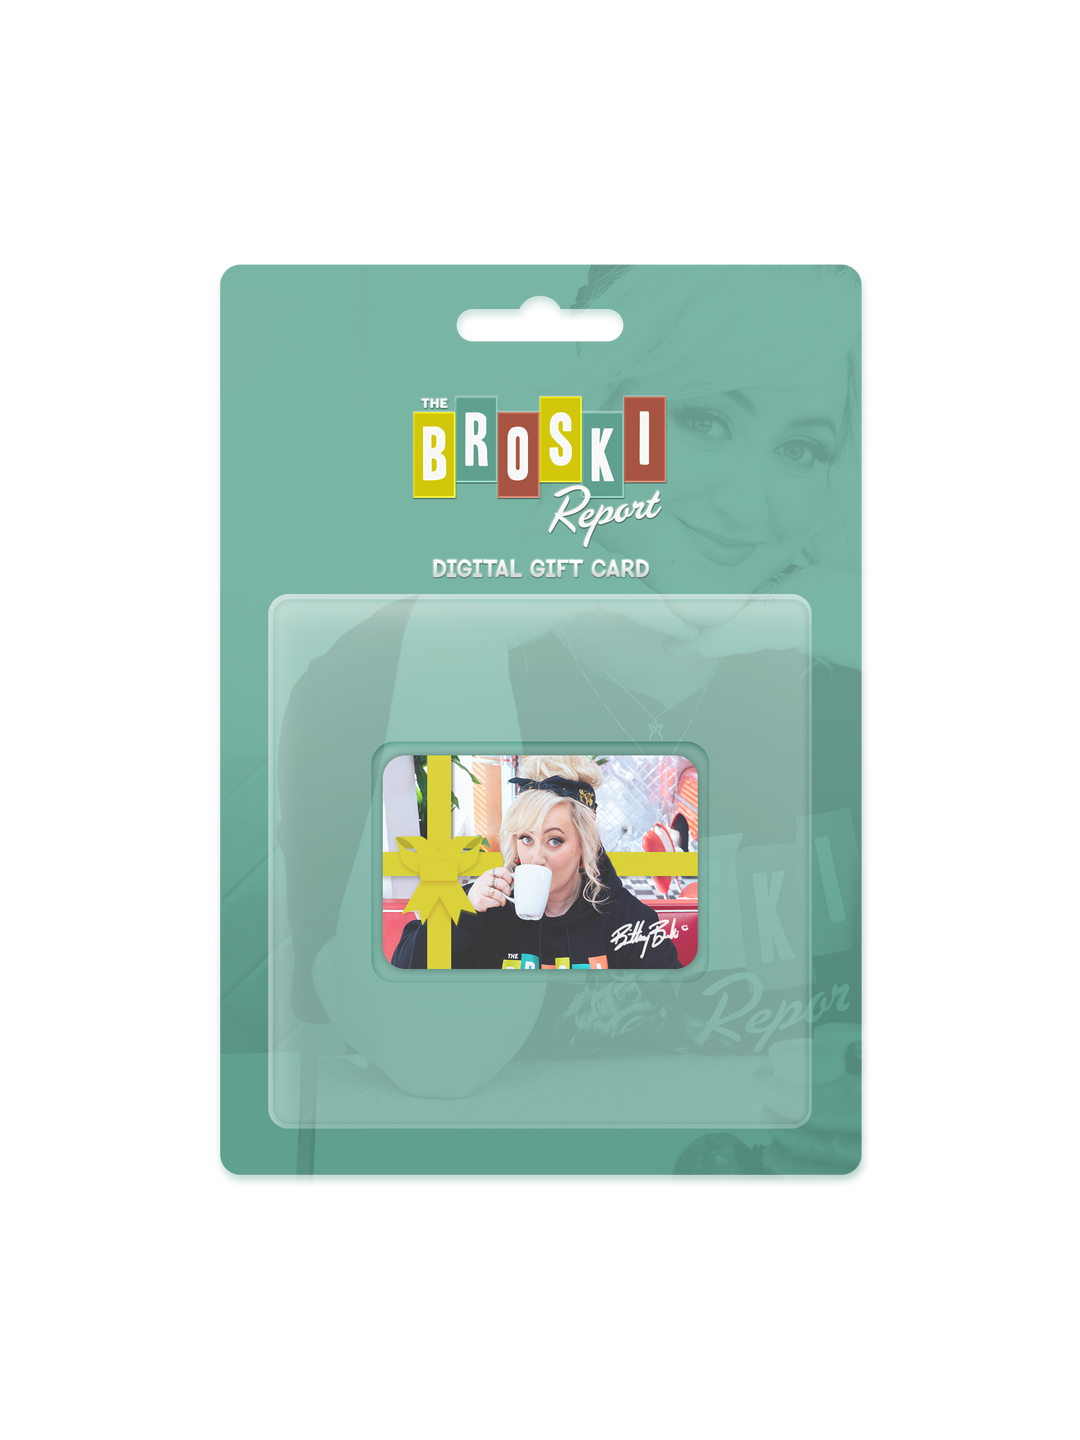 Brittany Broski Digital Gift Card